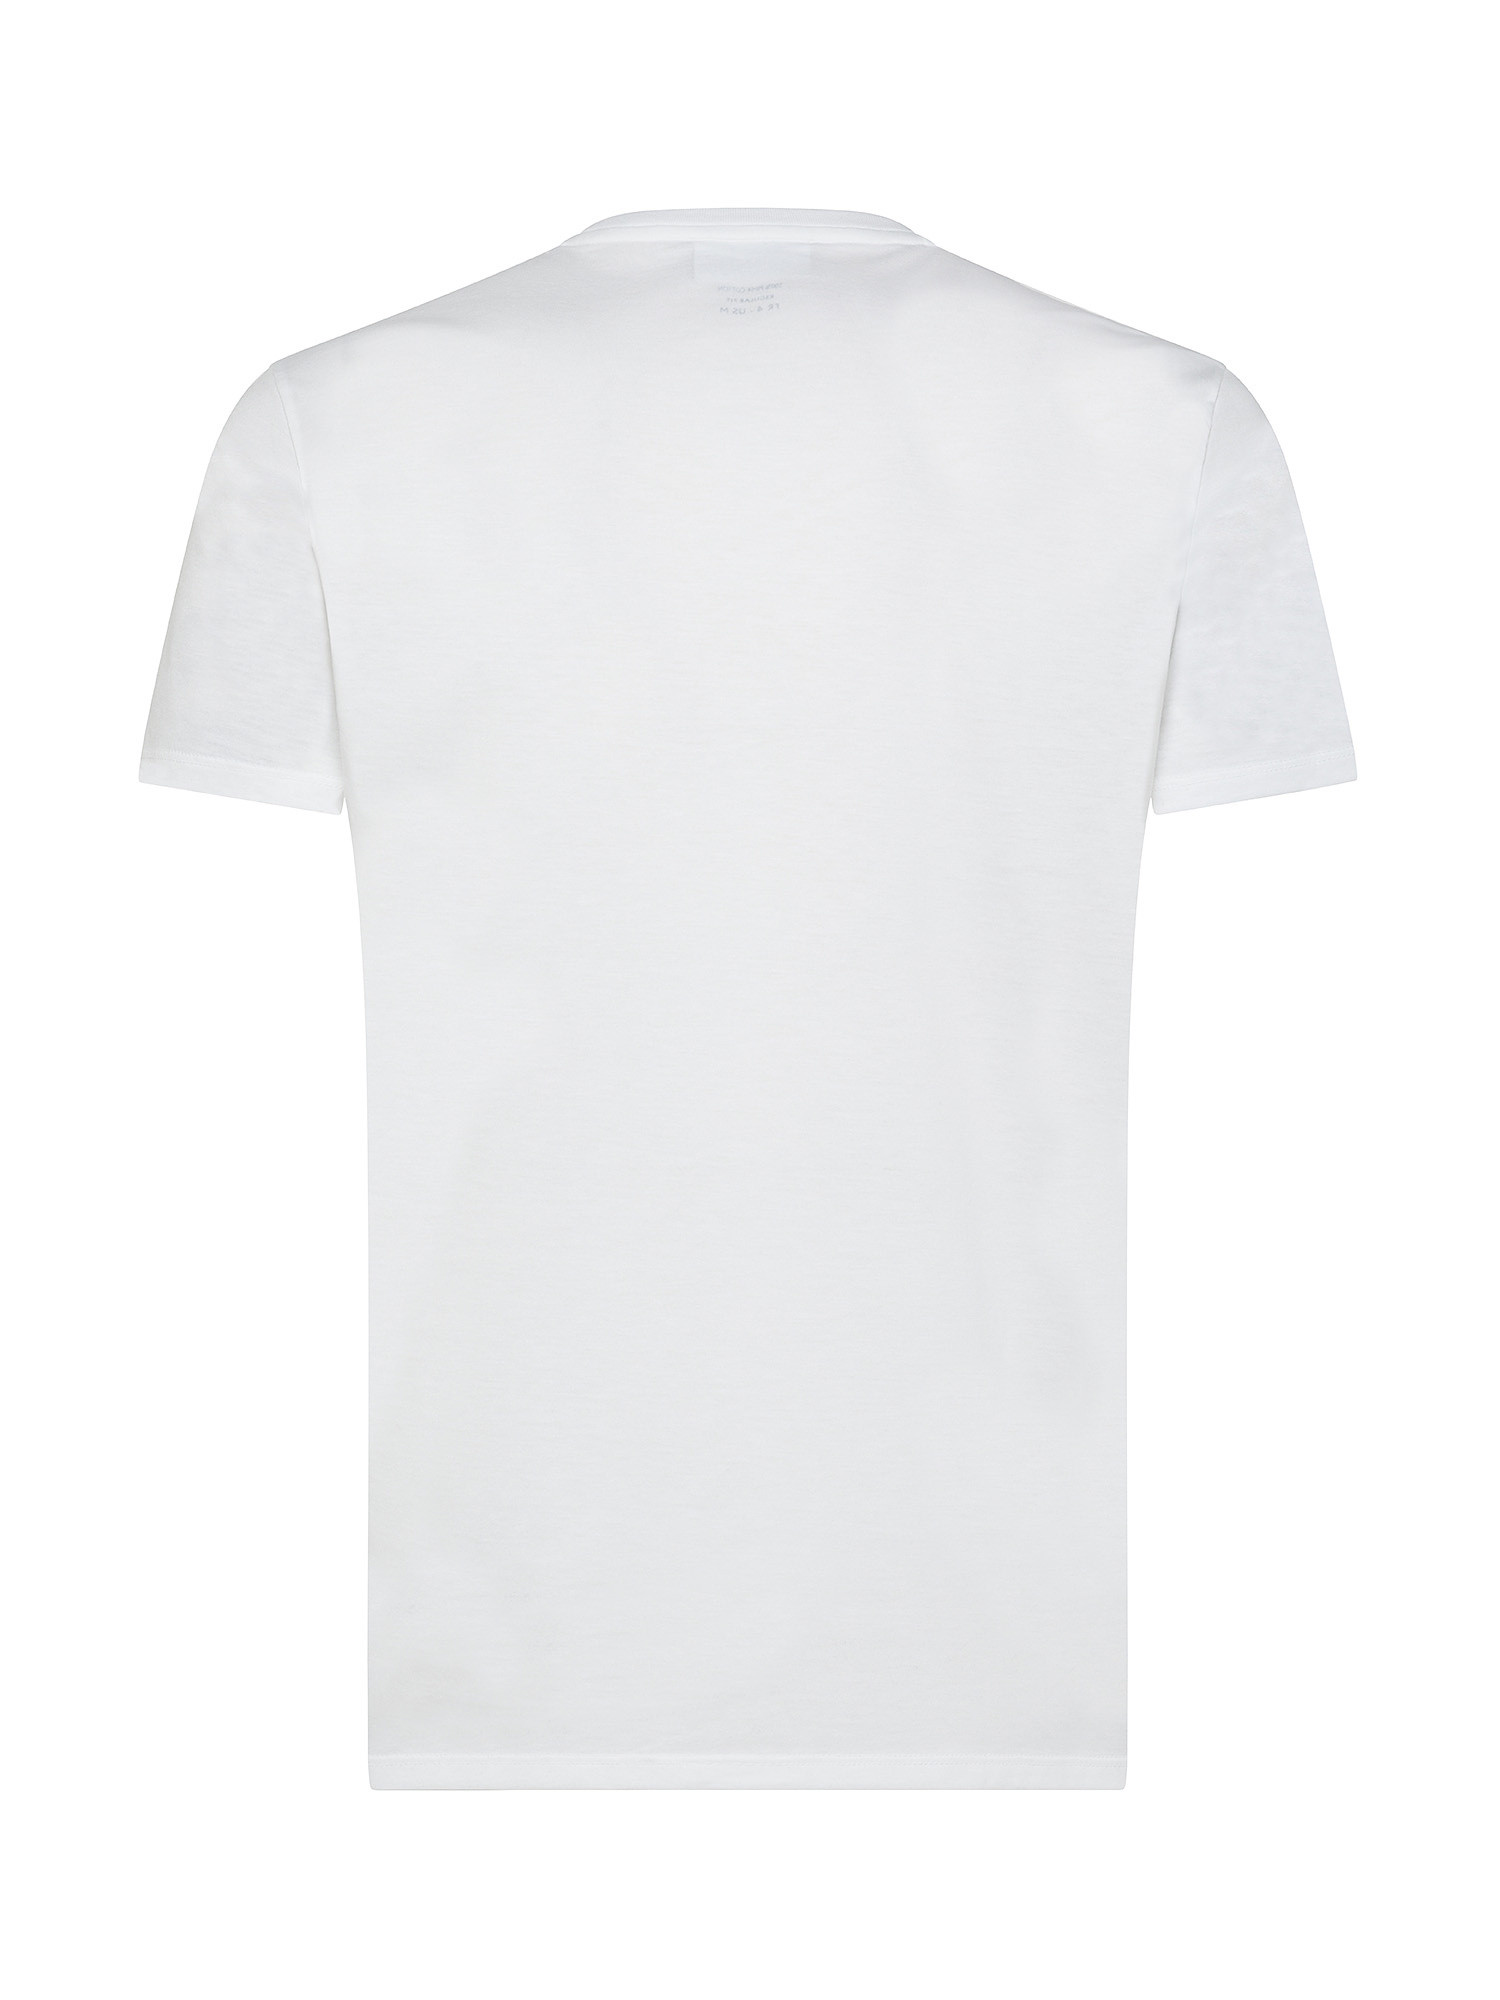 Lacoste - Pima cotton jersey crewneck T-shirt, White, large image number 1